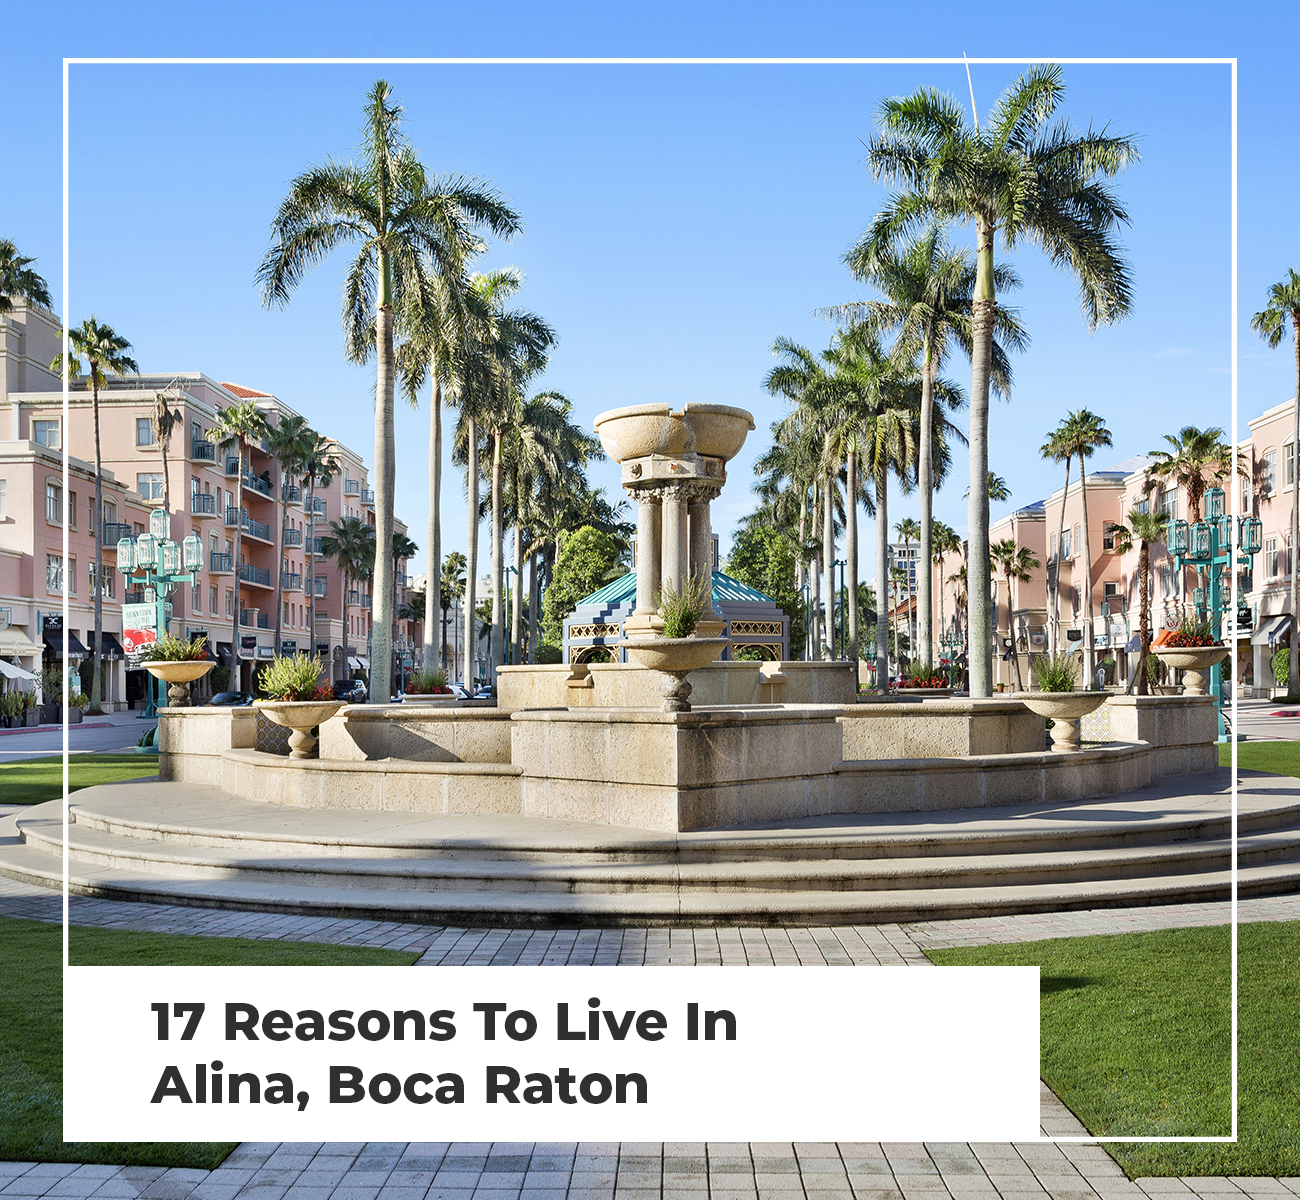 17 Reasons To Live In Alina, Boca Raton